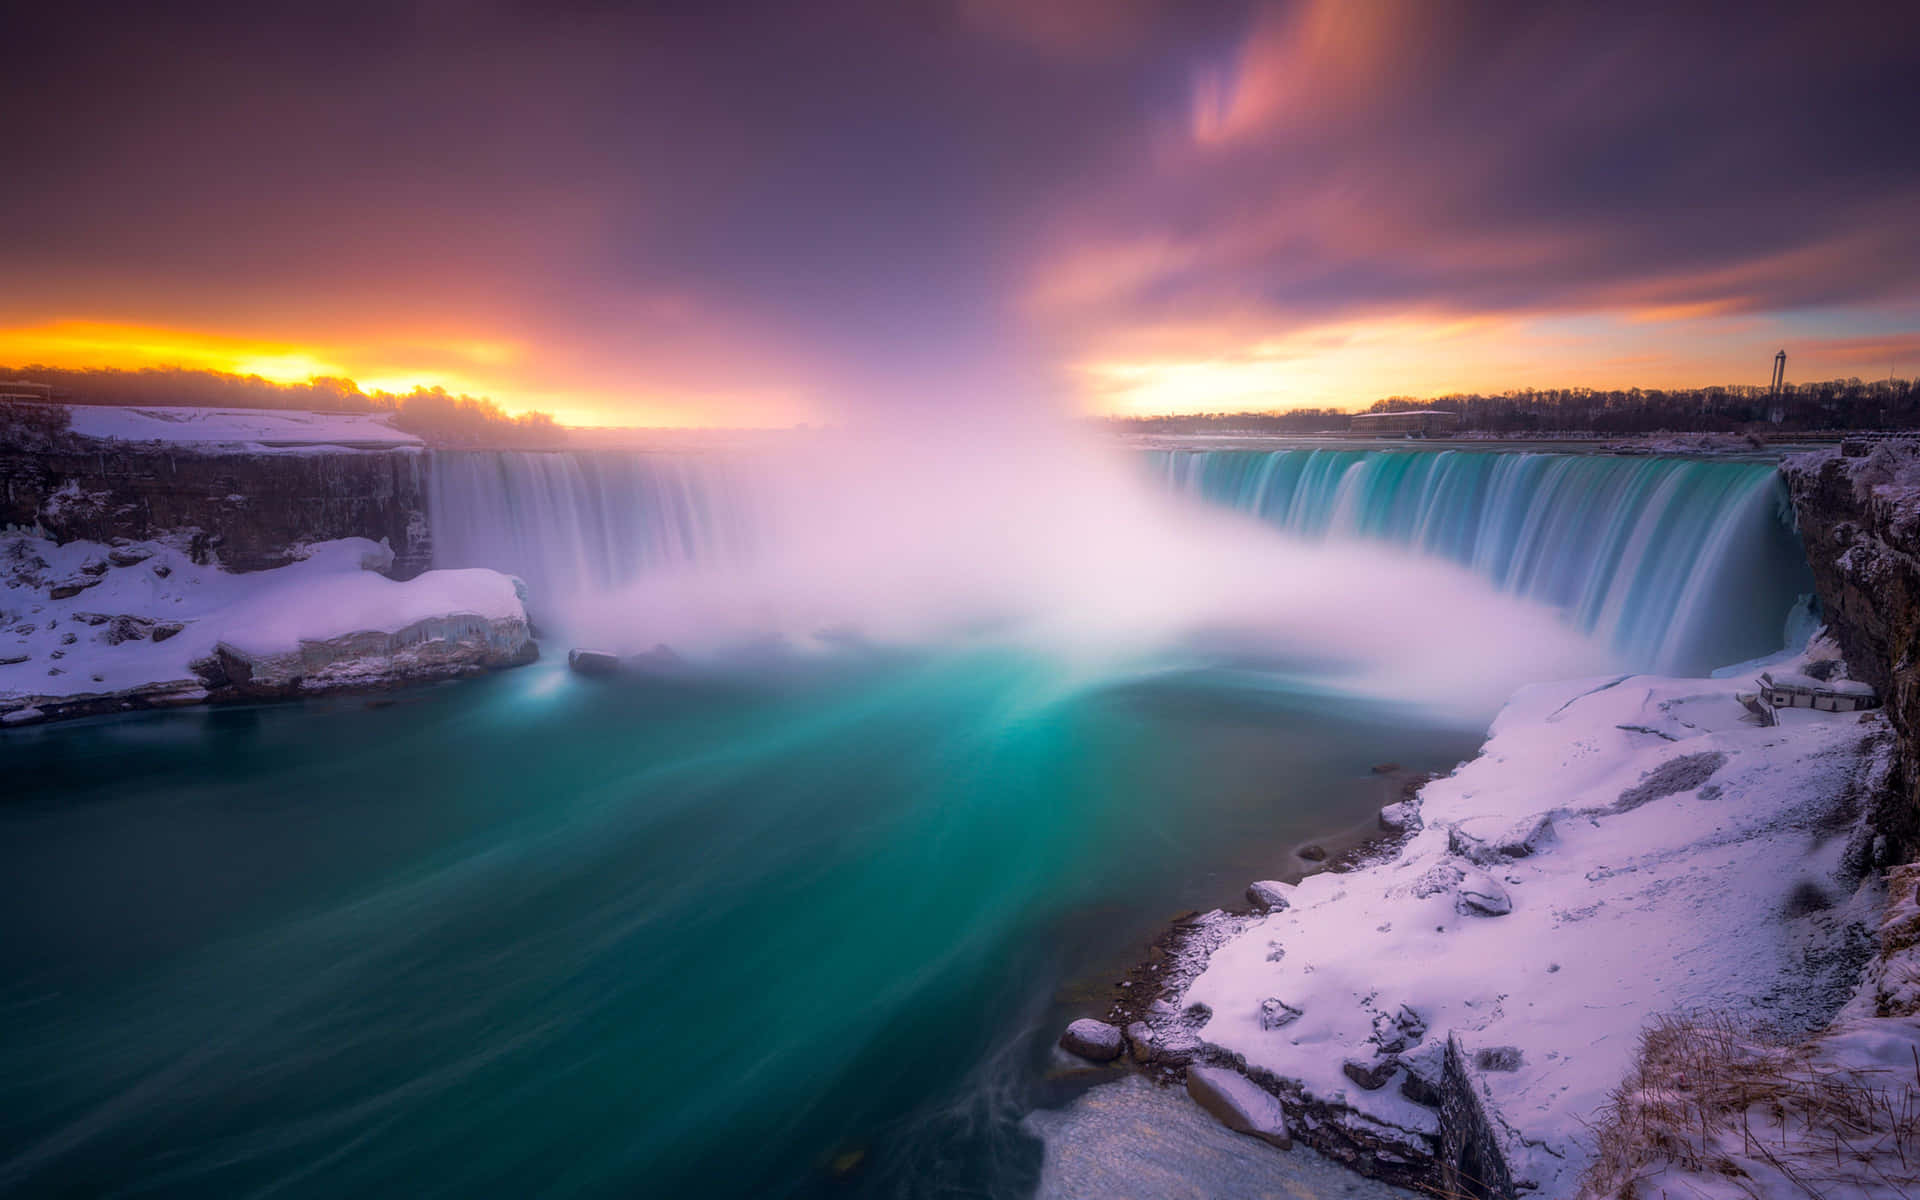 Enjoy the stunning view of the Niagara Falls